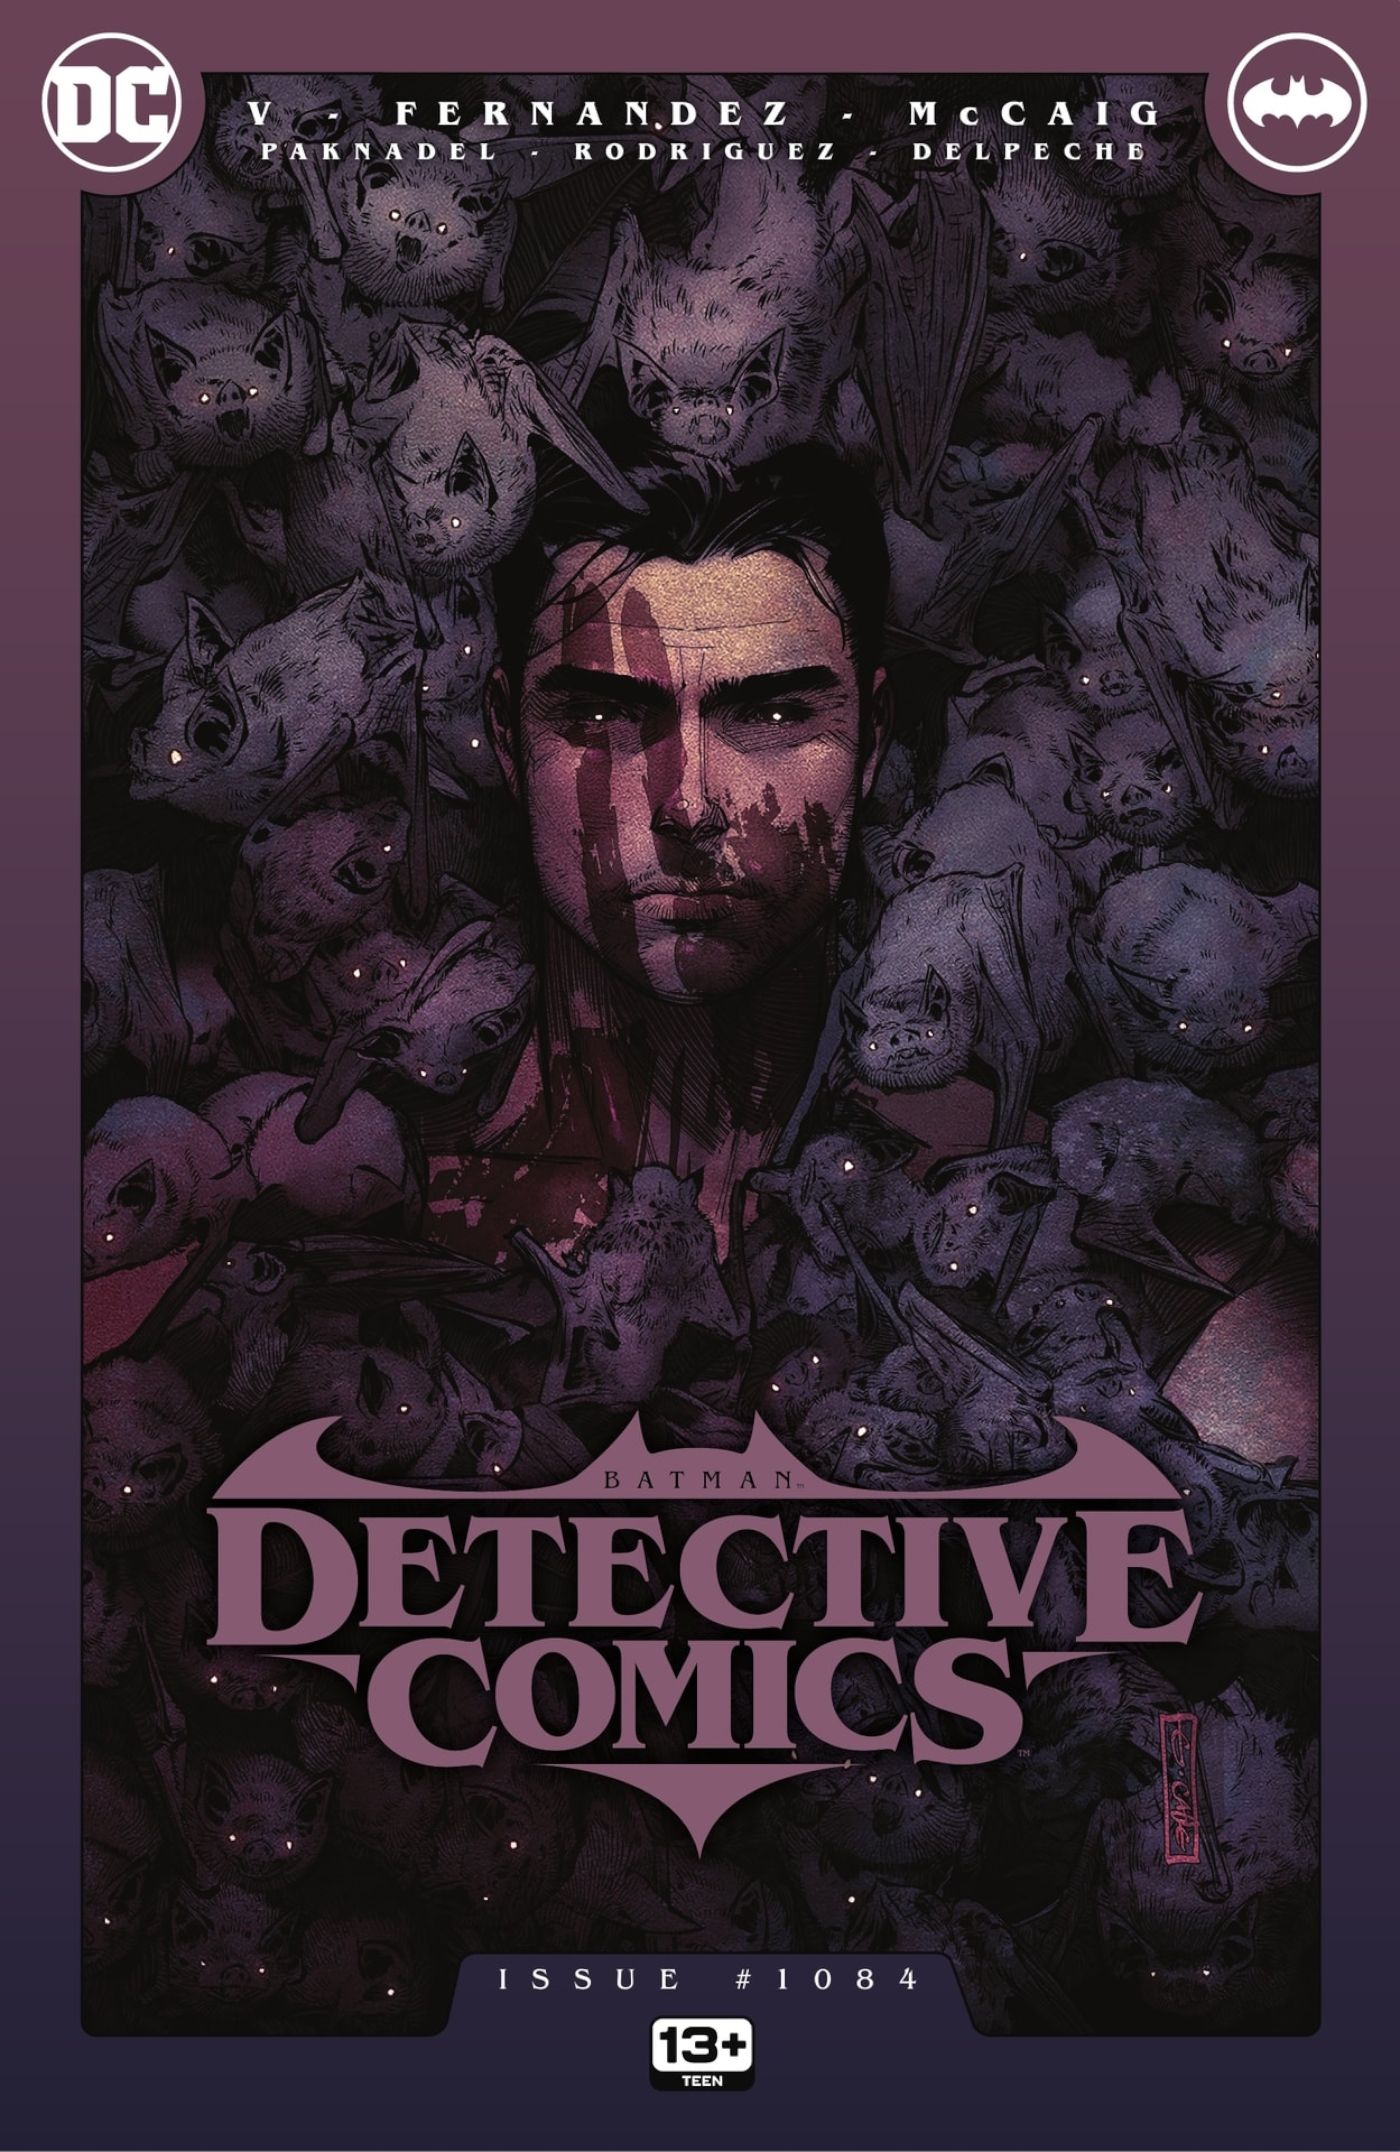 Capa principal da Detective Comics 1084: Bruce Wayne cercado por morcegos.